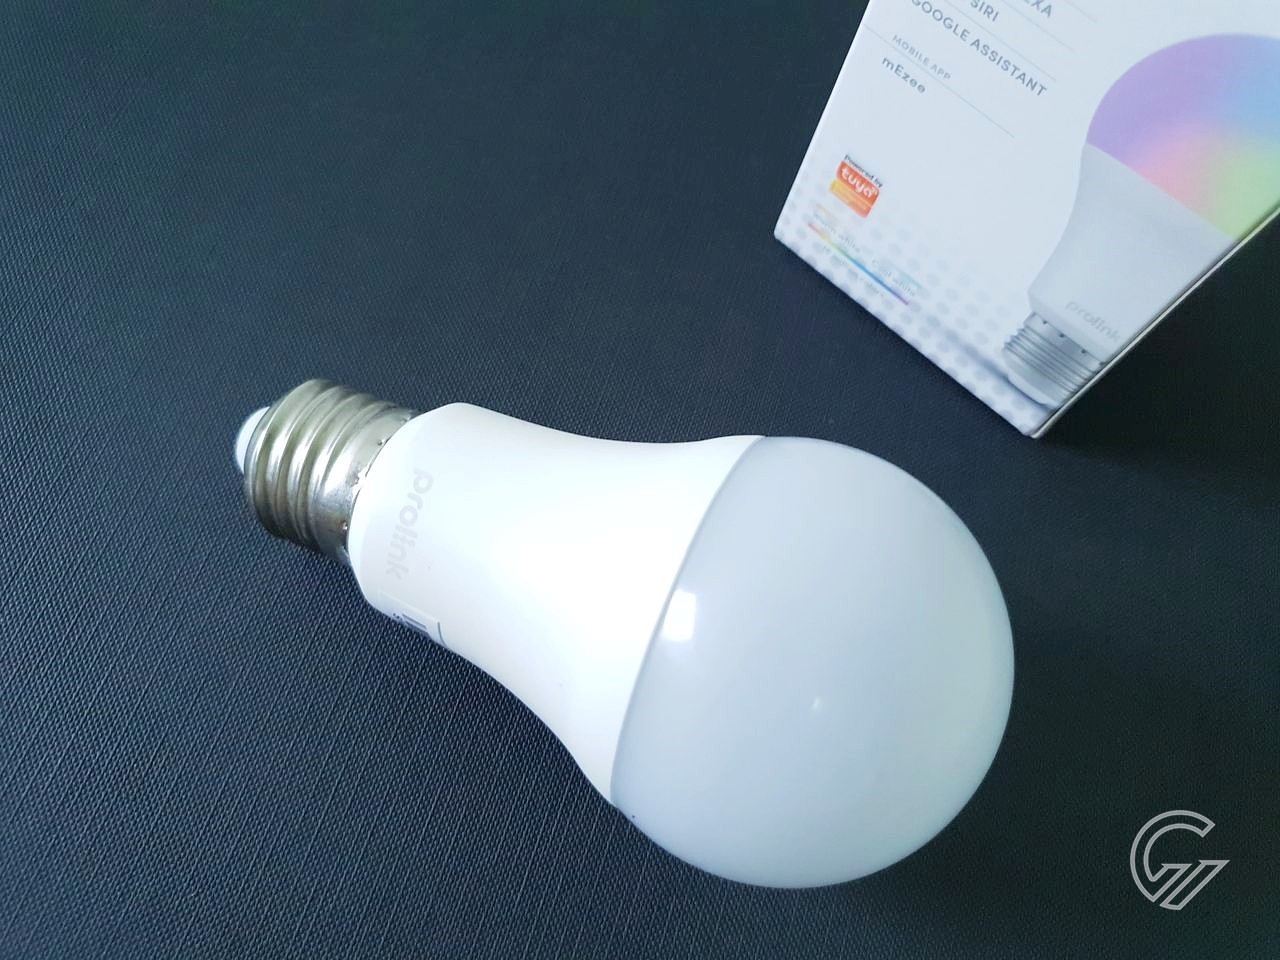 Ulasan Prolink Smart Bulb DS-3601